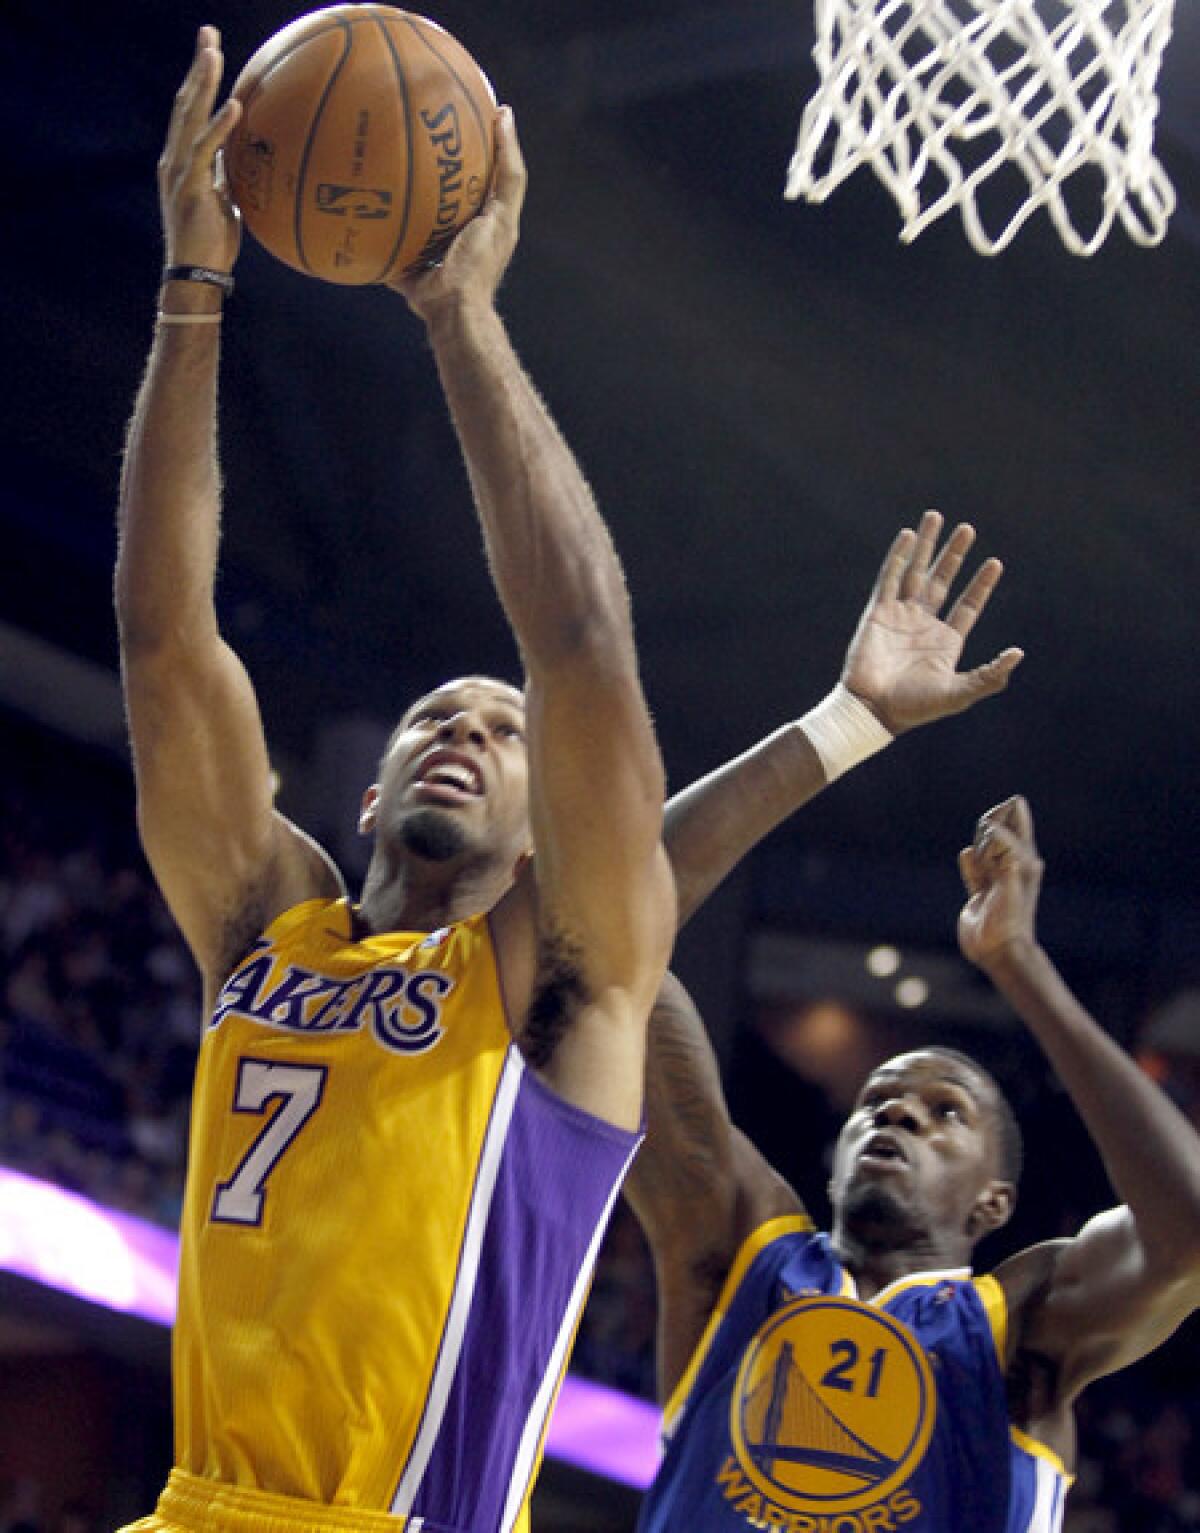 Lakers guard Xavier Henry scores against Warriors center Dewayne Dedmon in the third quarter Saturday night.